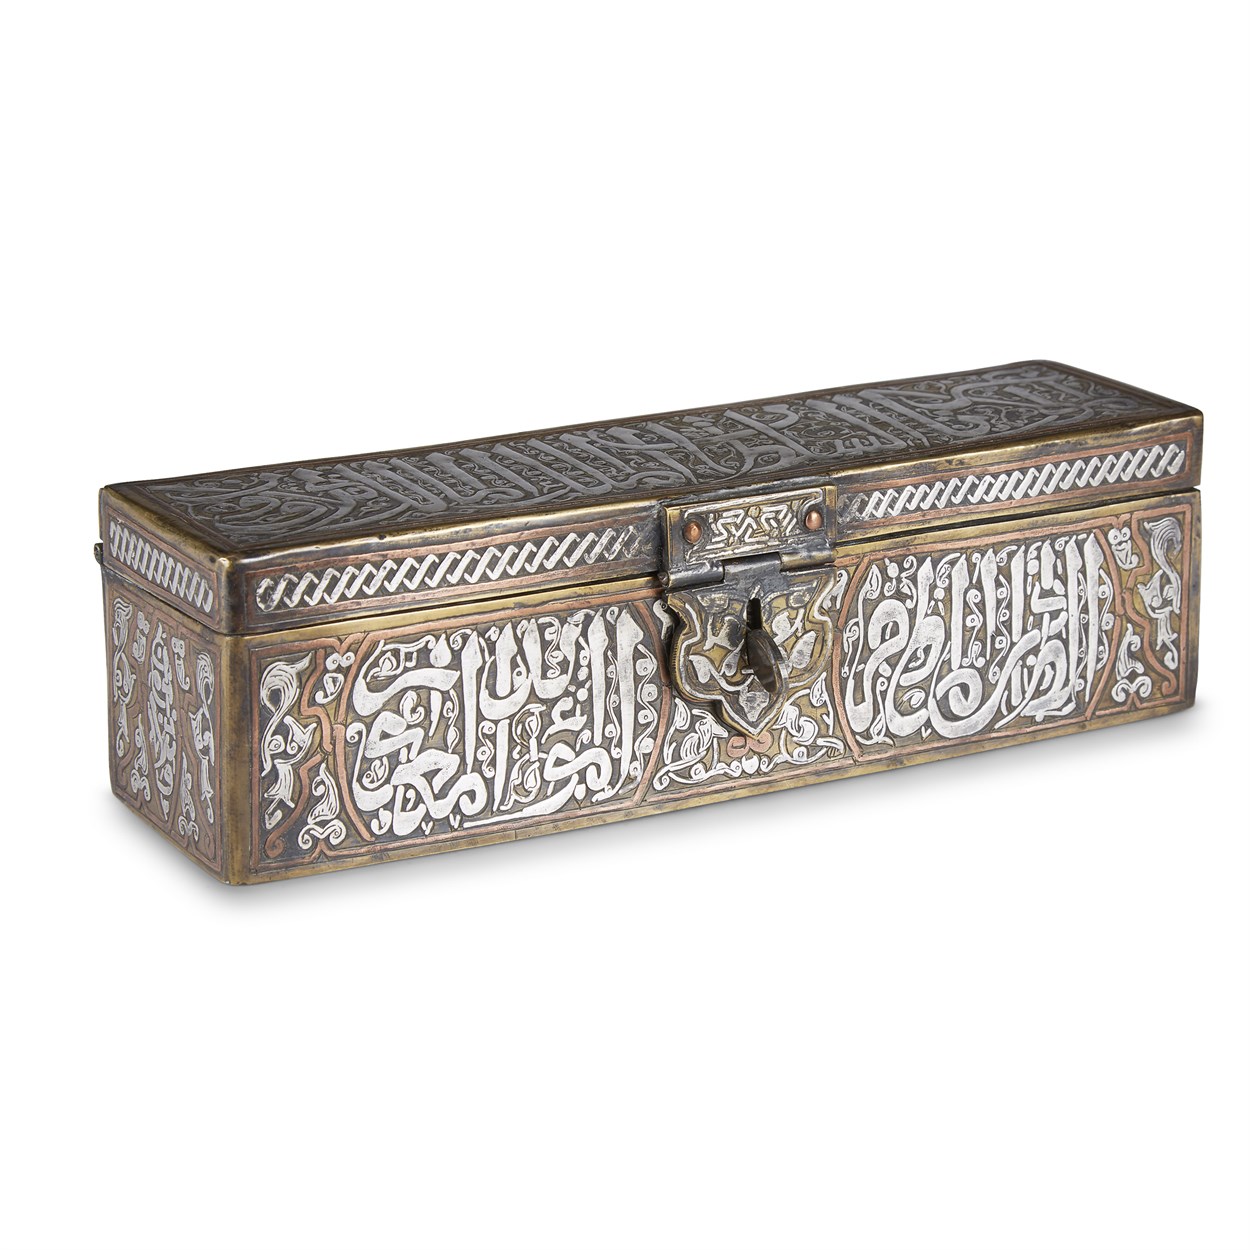 Lot 146 - A Mamluk revival silver and copper-inlaid rectangular brass kalamdan